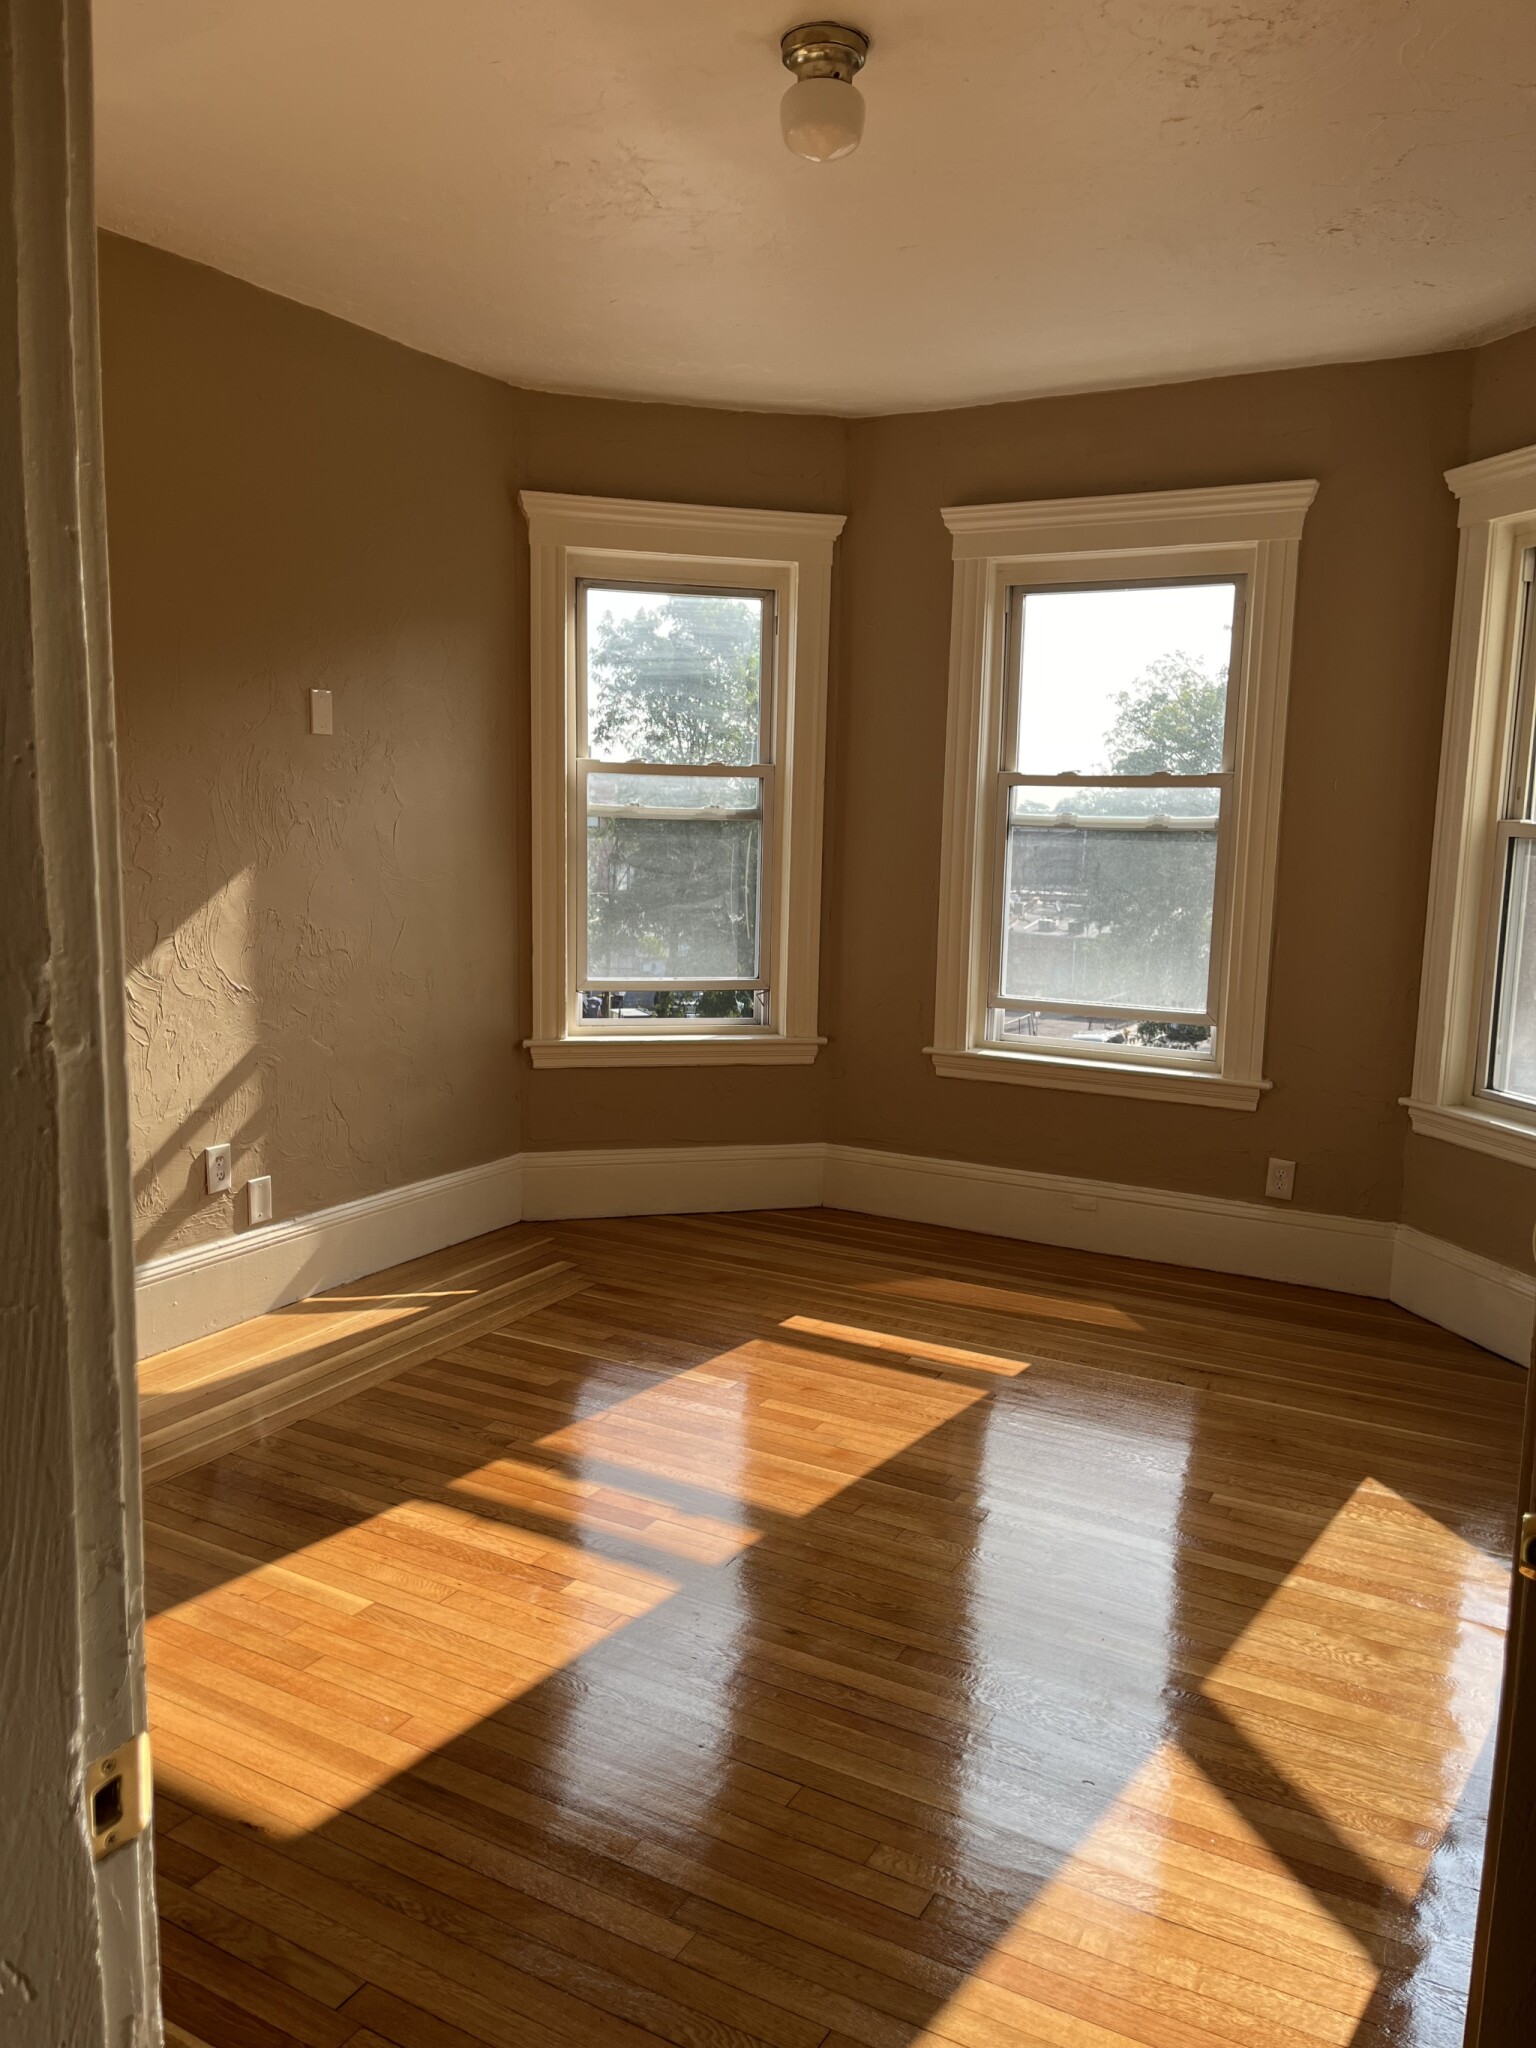 Photos of apartment on Wolcott St.,Boston MA 02121